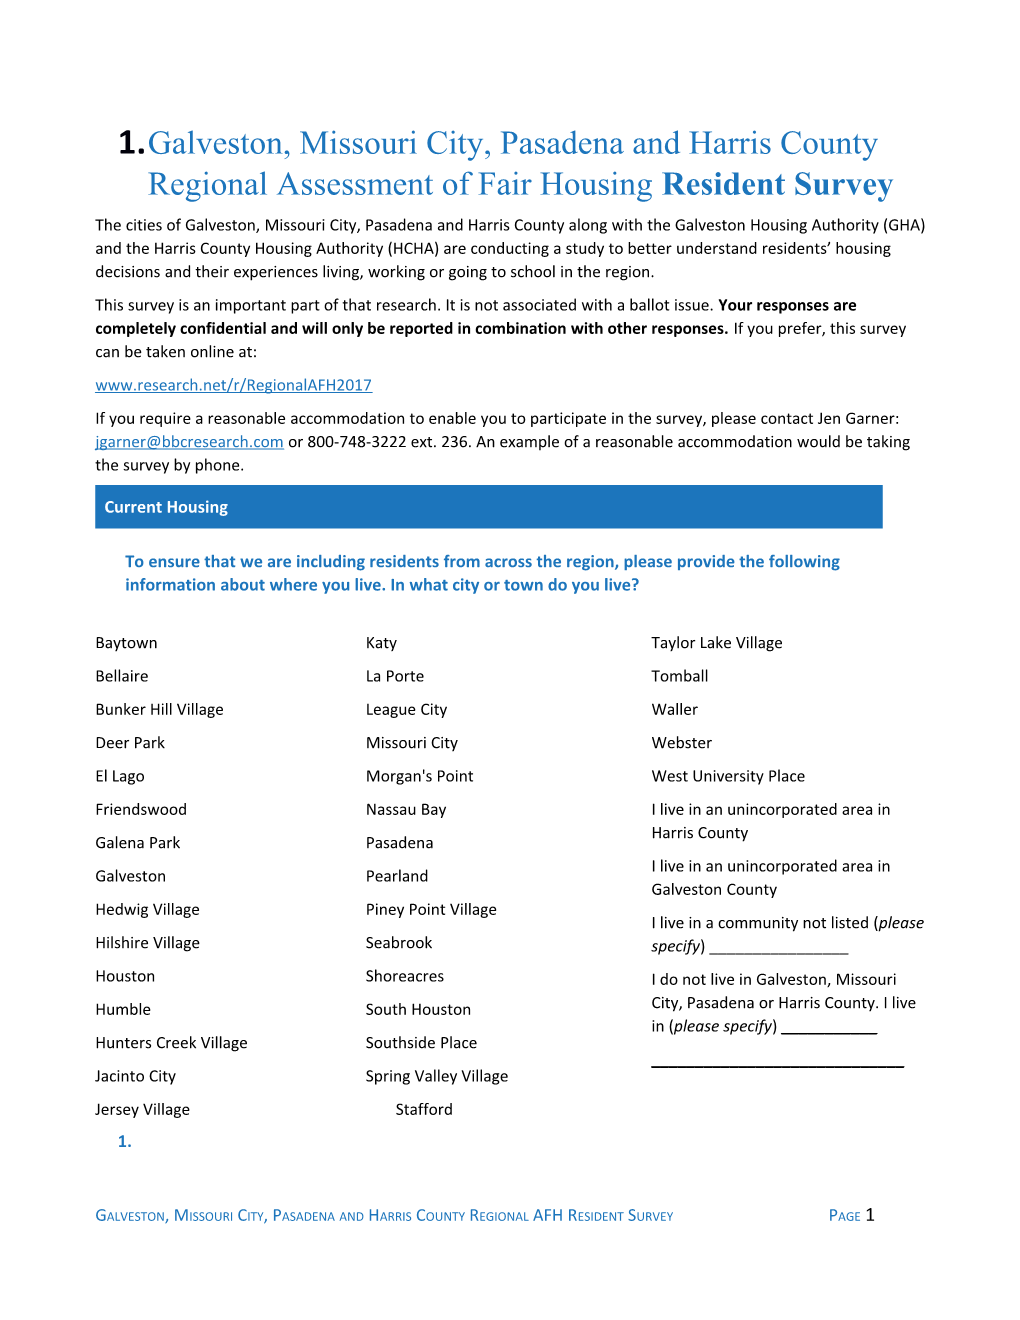 Galveston, Missouri City, Pasadena and Harris County Regional Assessment of Fair Housing